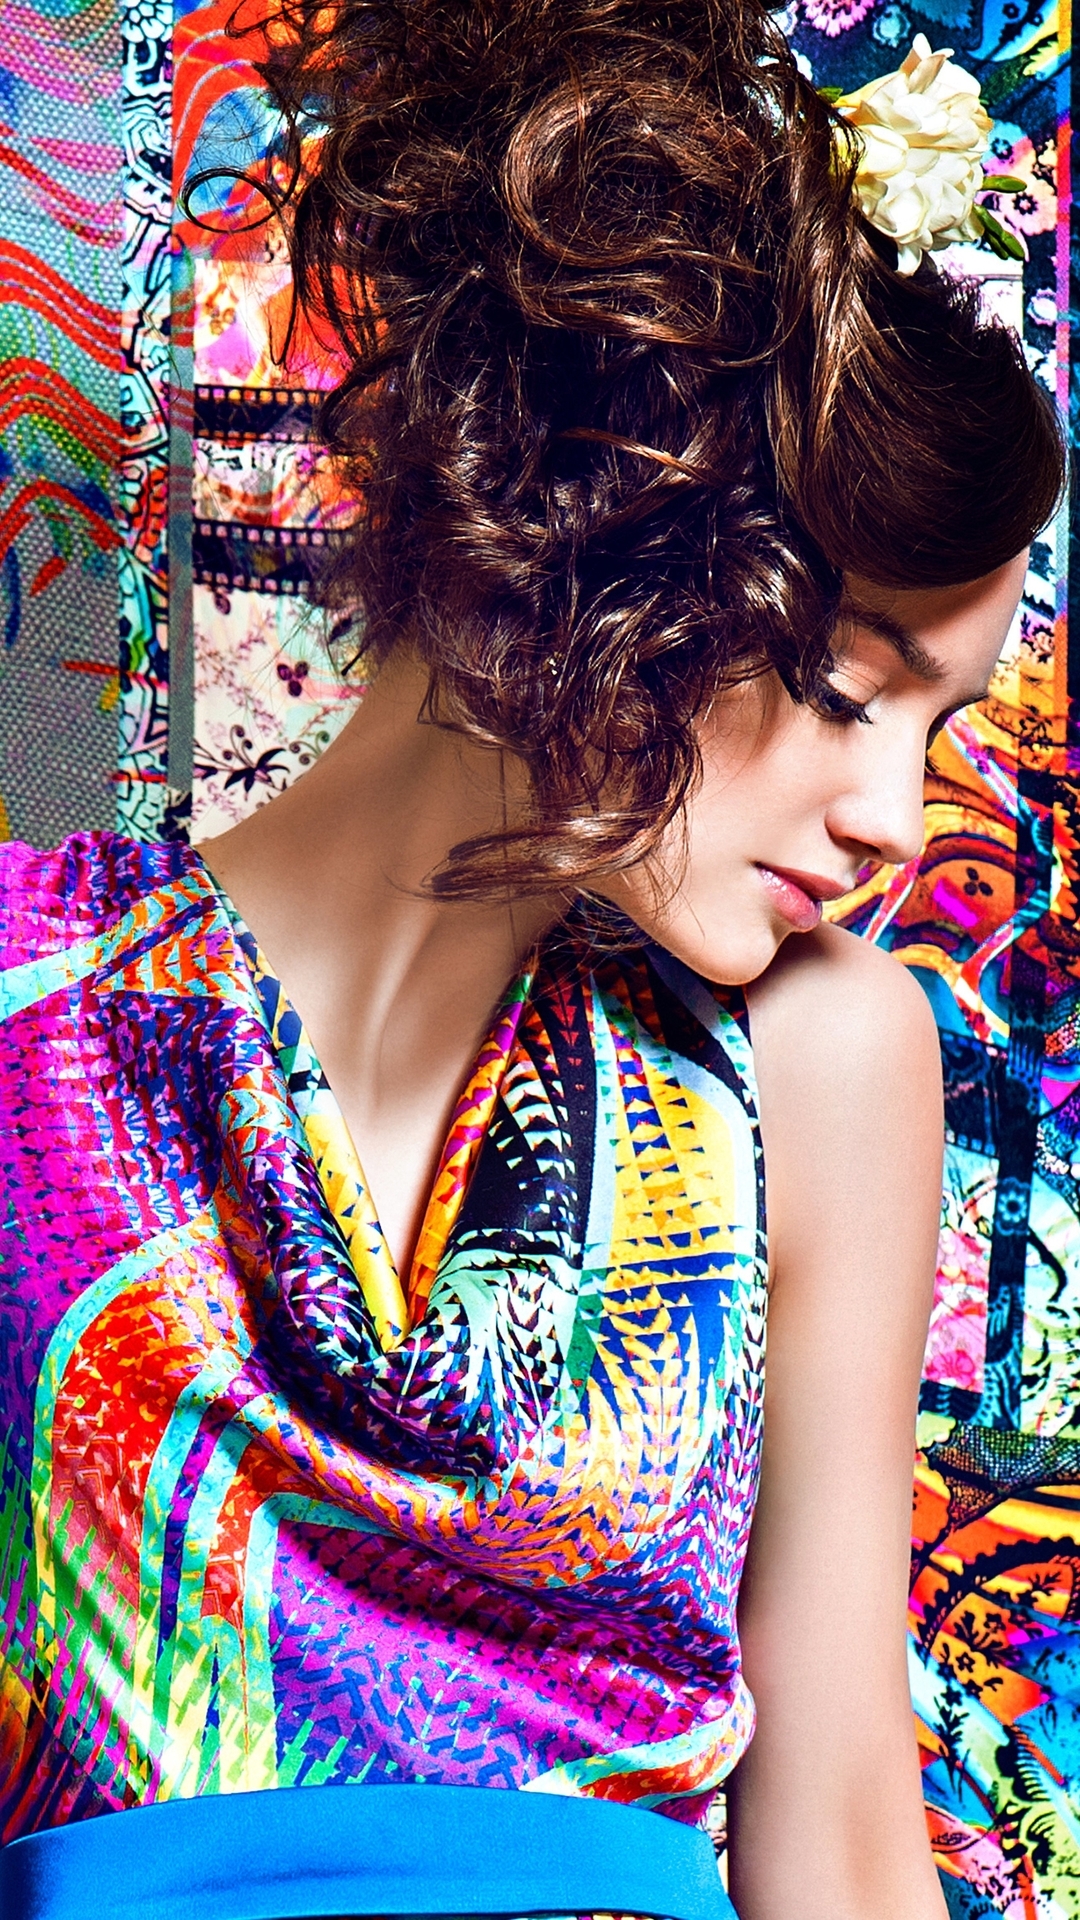 Image: Girl, model, hair, curls, bright dress, ornament